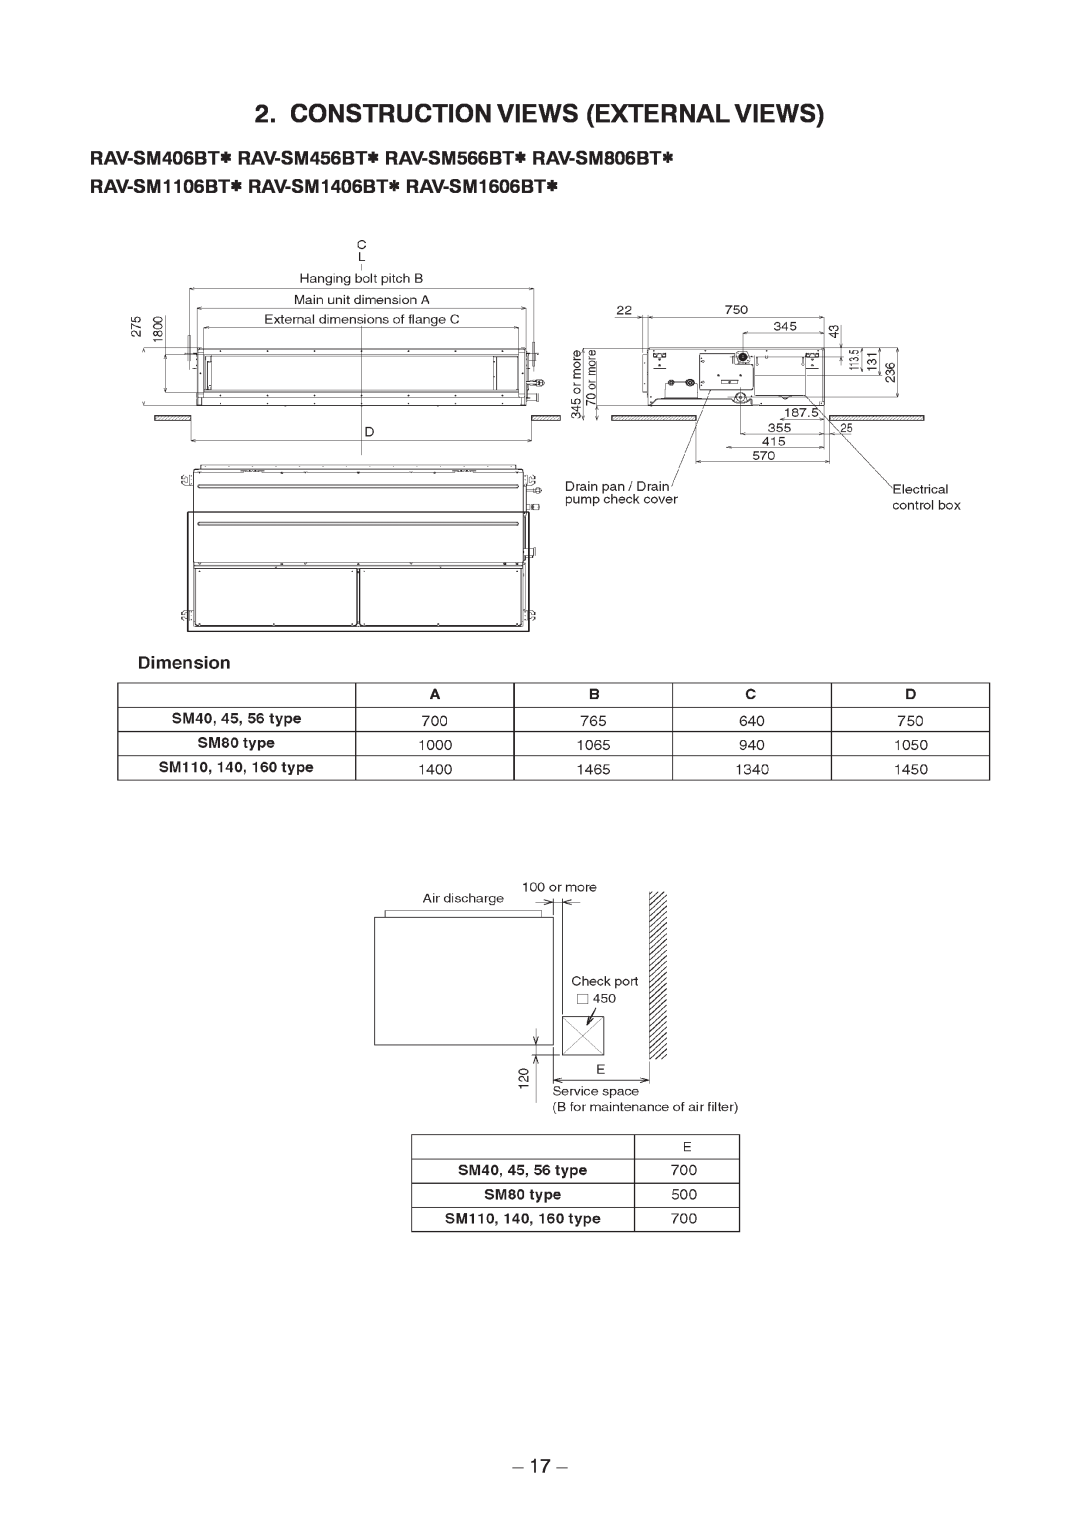 Toshiba RAV-SM1406BT-TR, RAV-SM406BT-TR, RAV-SM1406BT-E, RAV-SM1606BT-E, RAV-SM1606BT-TR Construction Views External Views 